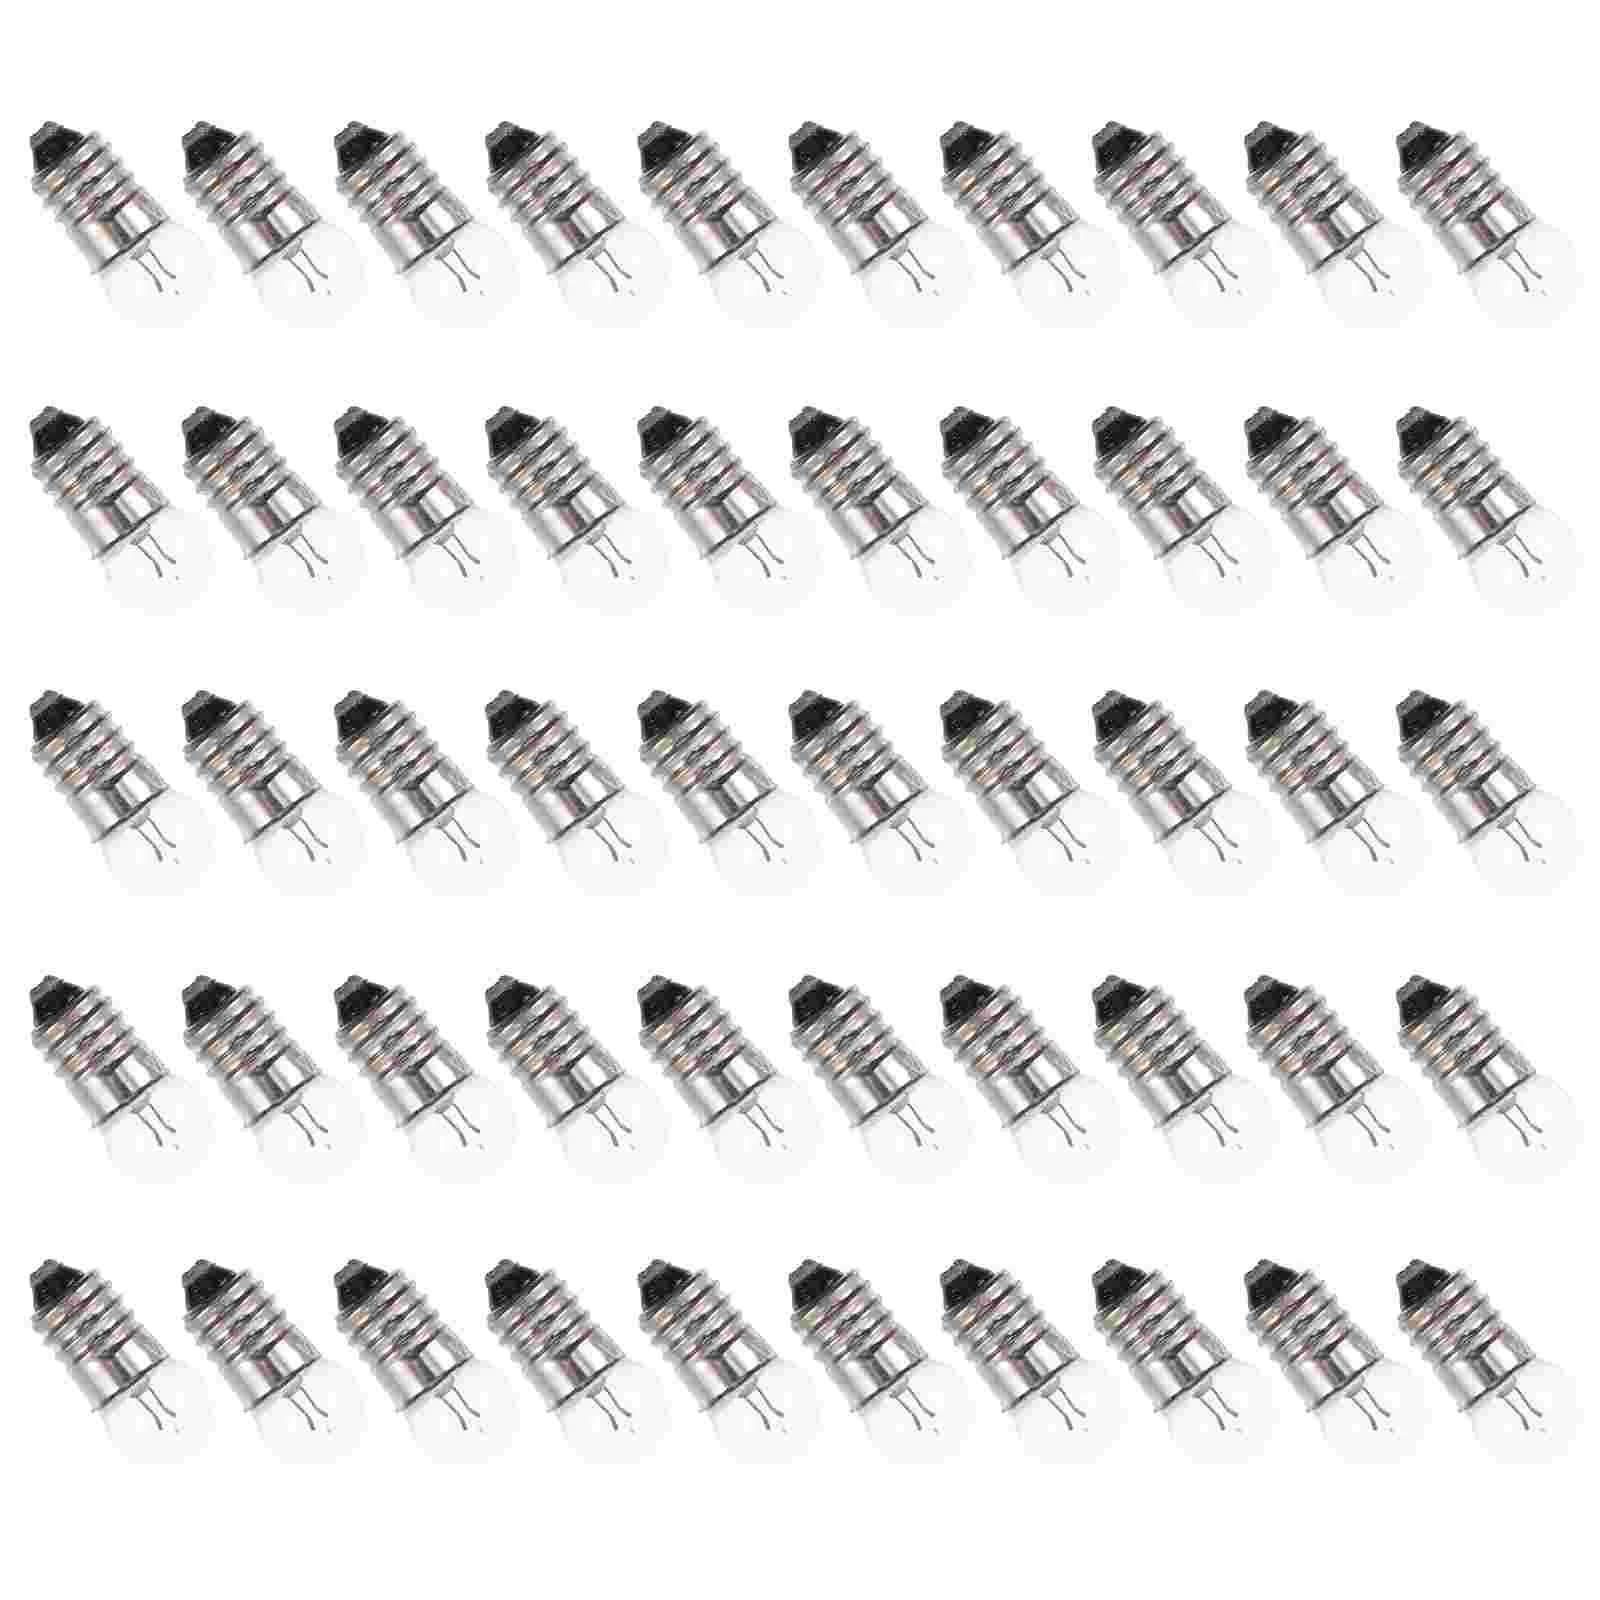 

50 Pcs Small Bulbs Electrical Kit Light Fixture Screws Indicator Physics Circuit Glass Science Experiments Miniature Bases